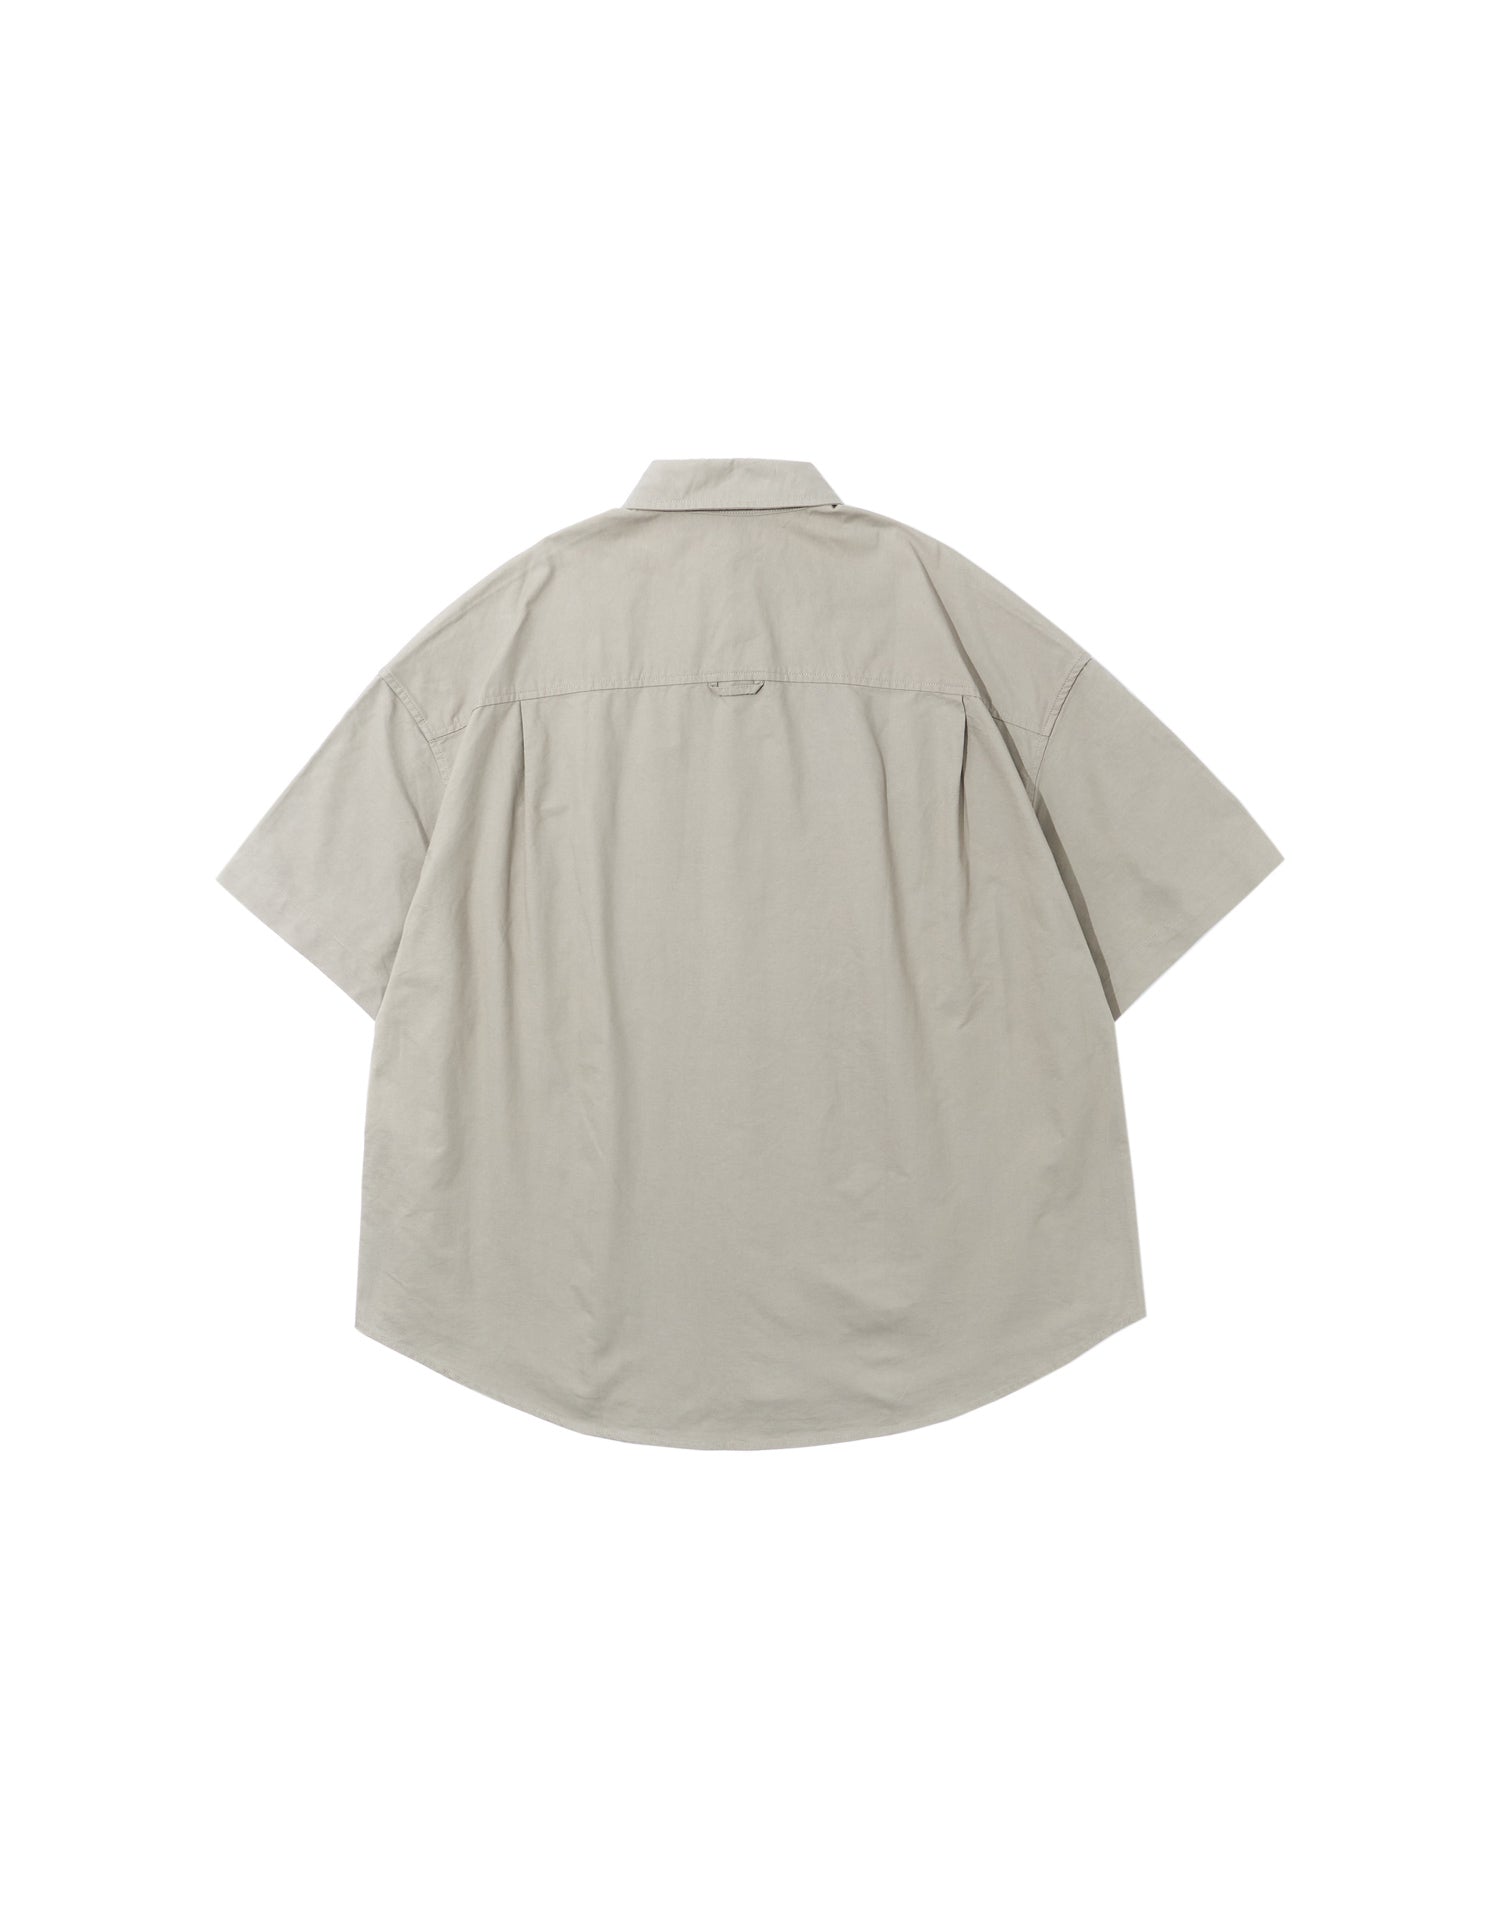 TopBasics Two Pockets Daily Cotton Shirt